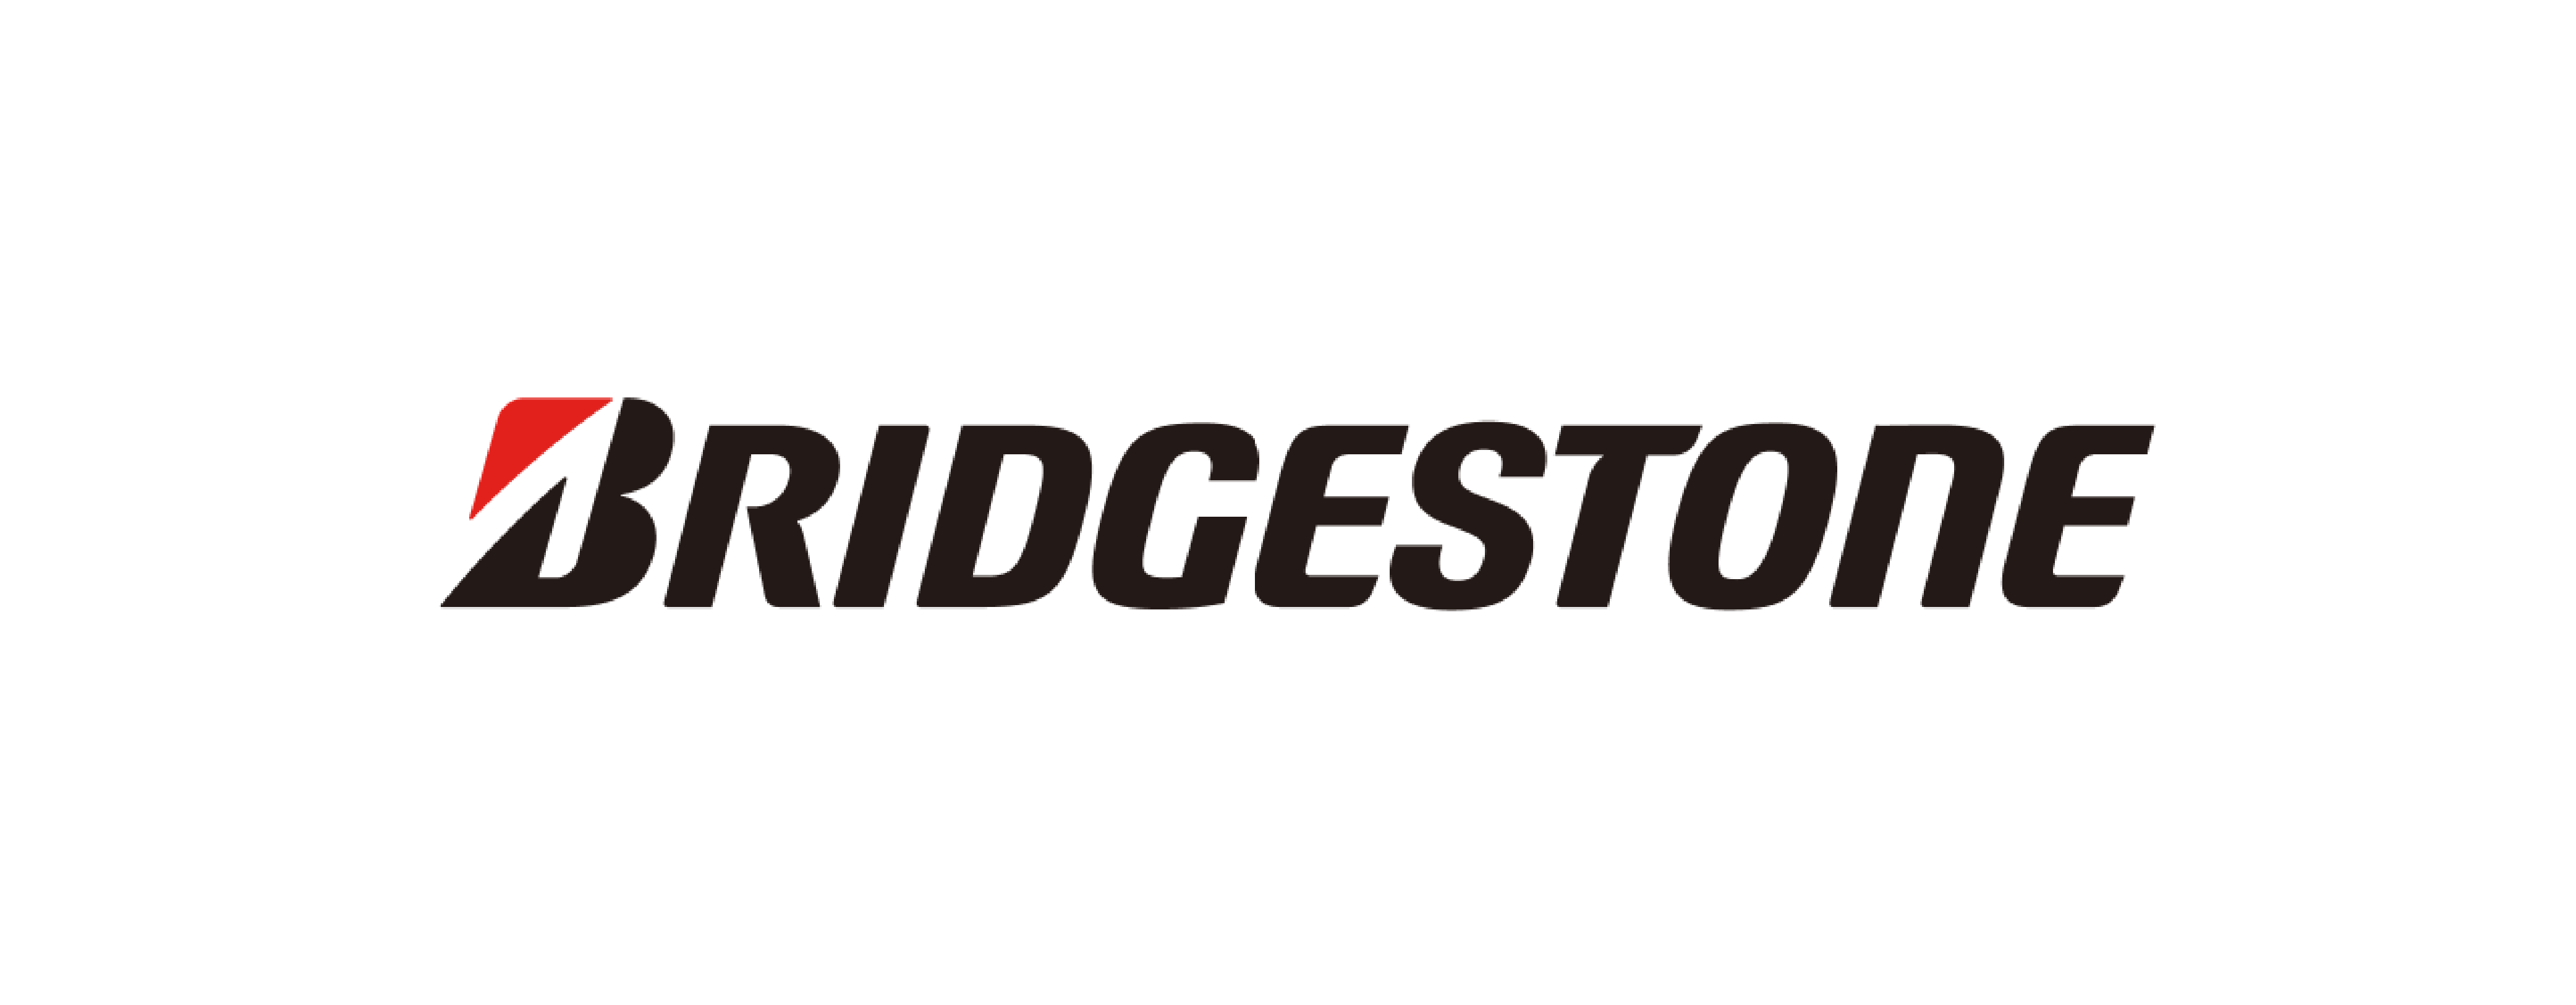 Latest News from Bridgestone Americas